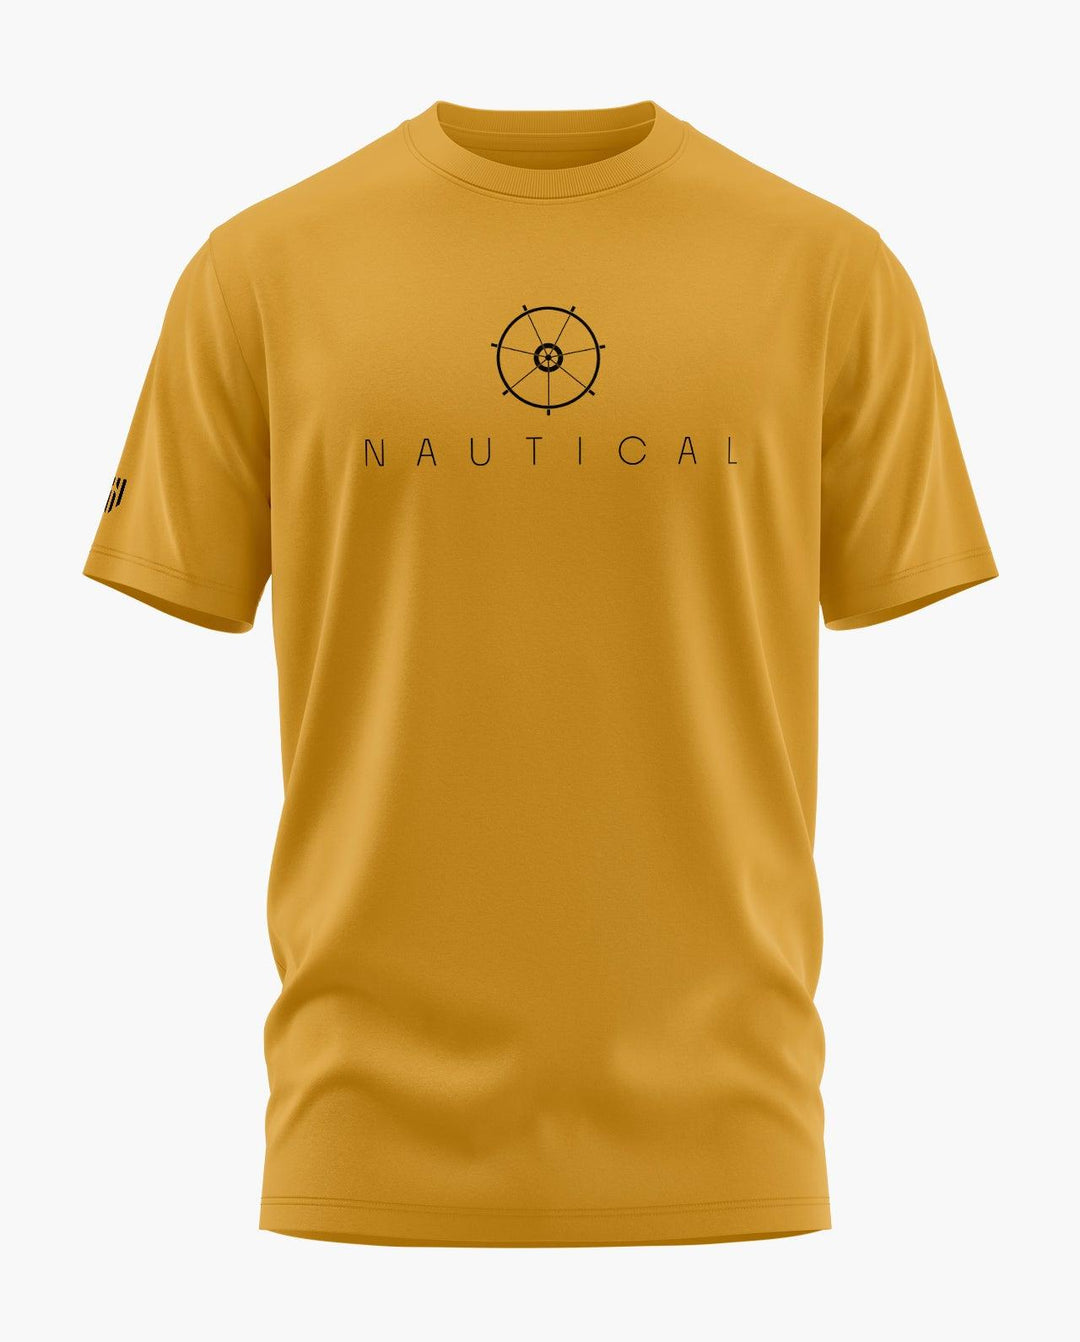 Nautical Helm T-Shirt - Aero Armour